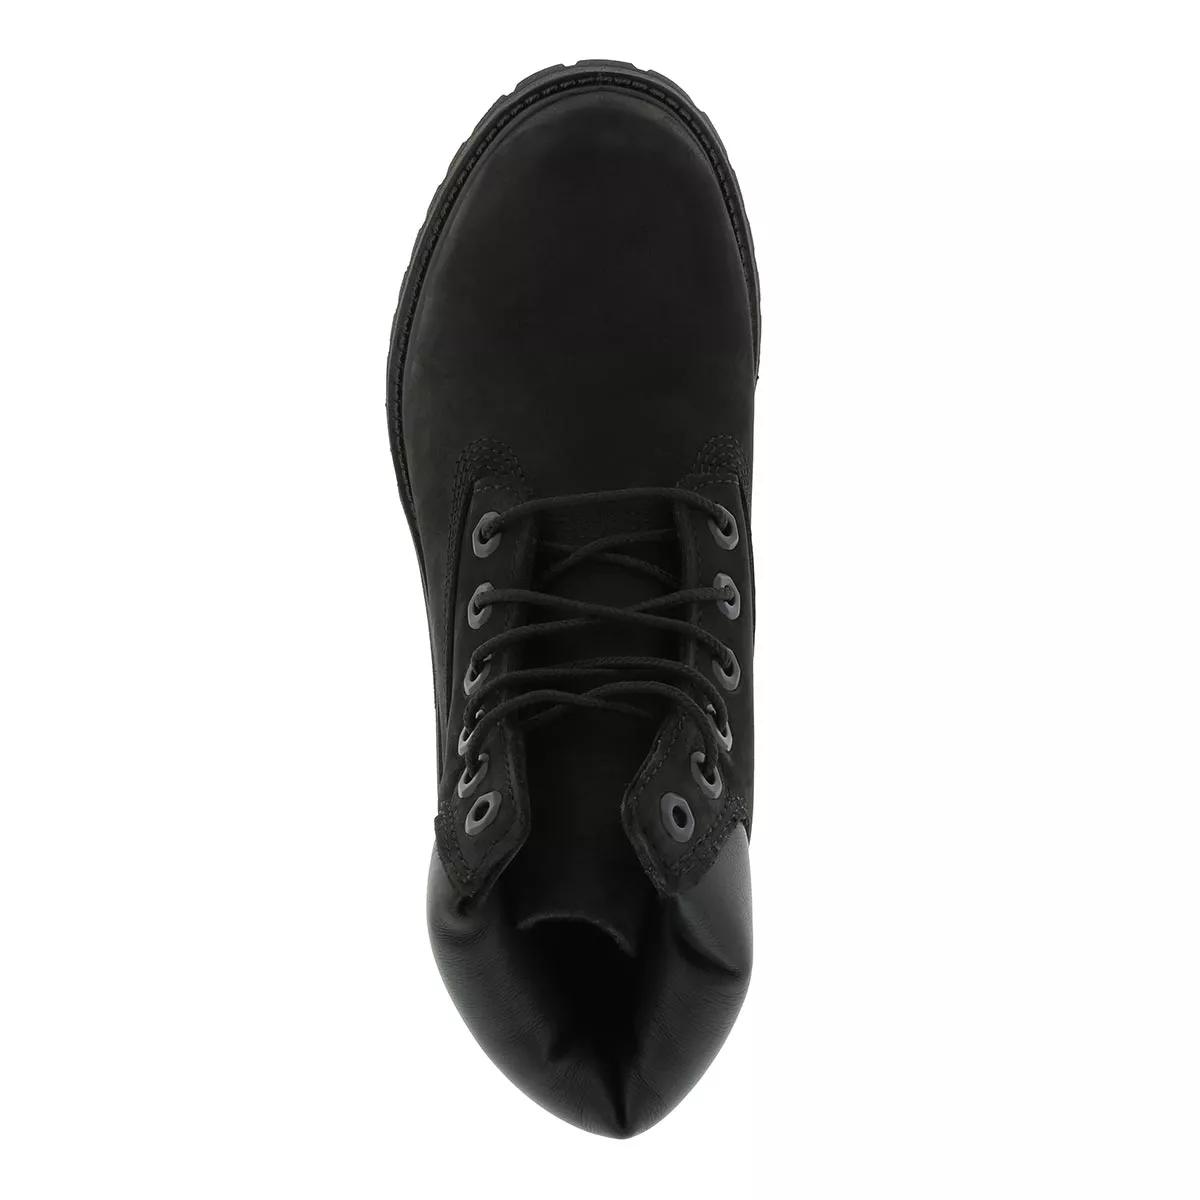 timberland - rockabilly boot - 6 inch premium boot - w - eu36 bis eu42 - fÃ¼r damen - grÃ¶ÃŸe eu41 - schwarz donna